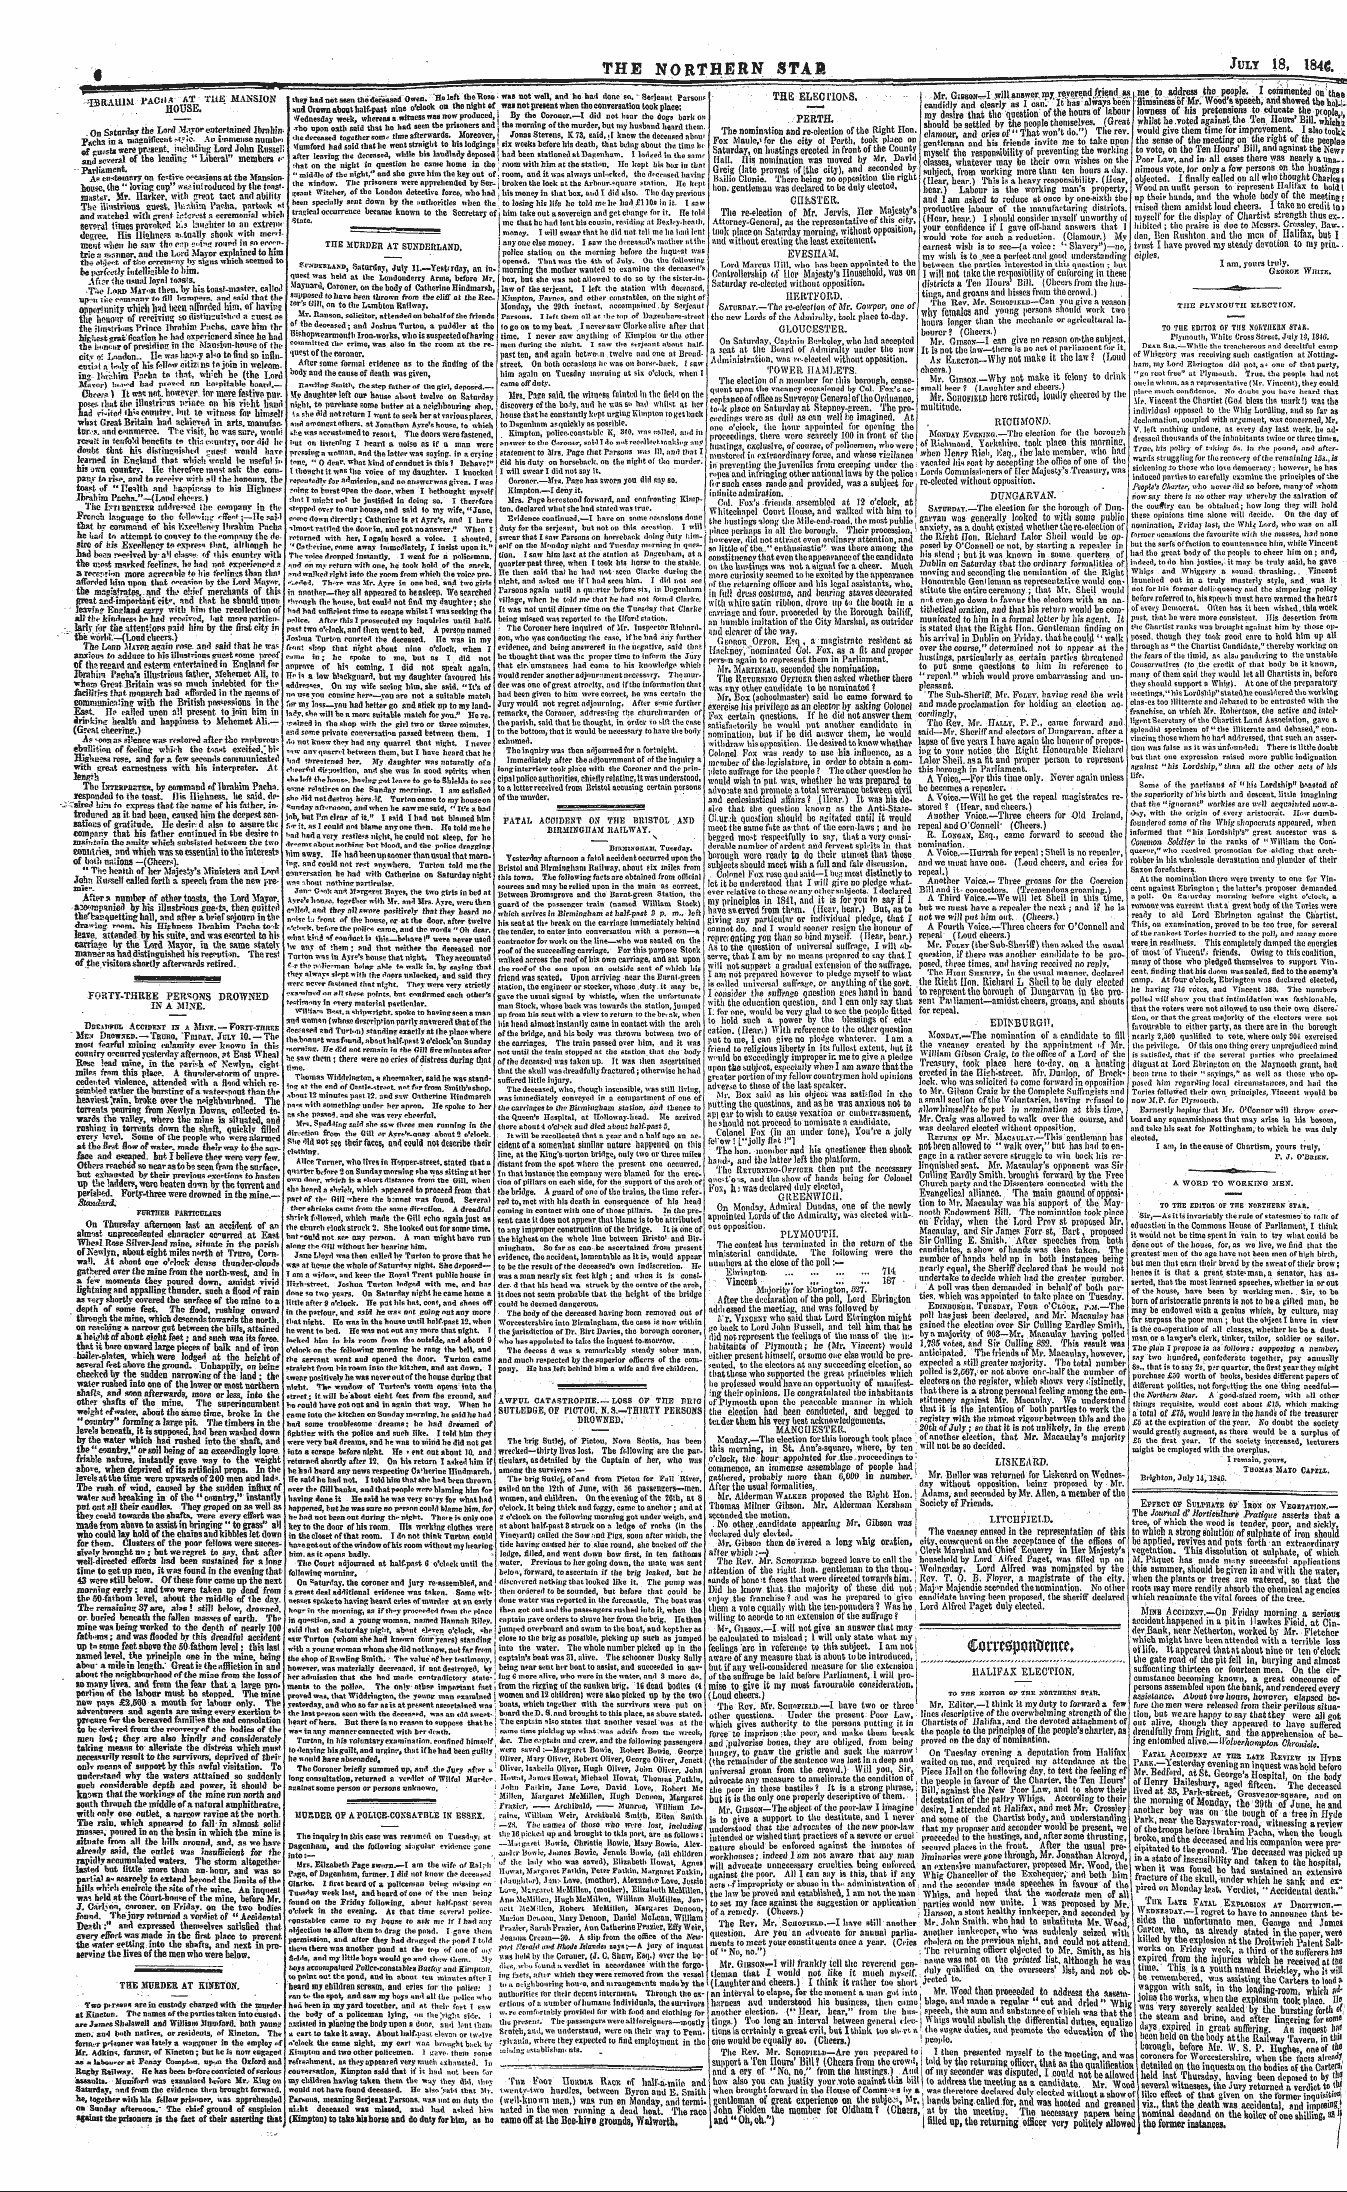 Northern Star (1837-1852): jS F Y, 3rd edition - The Murder At Sunderland. Srstcblaxn , S...